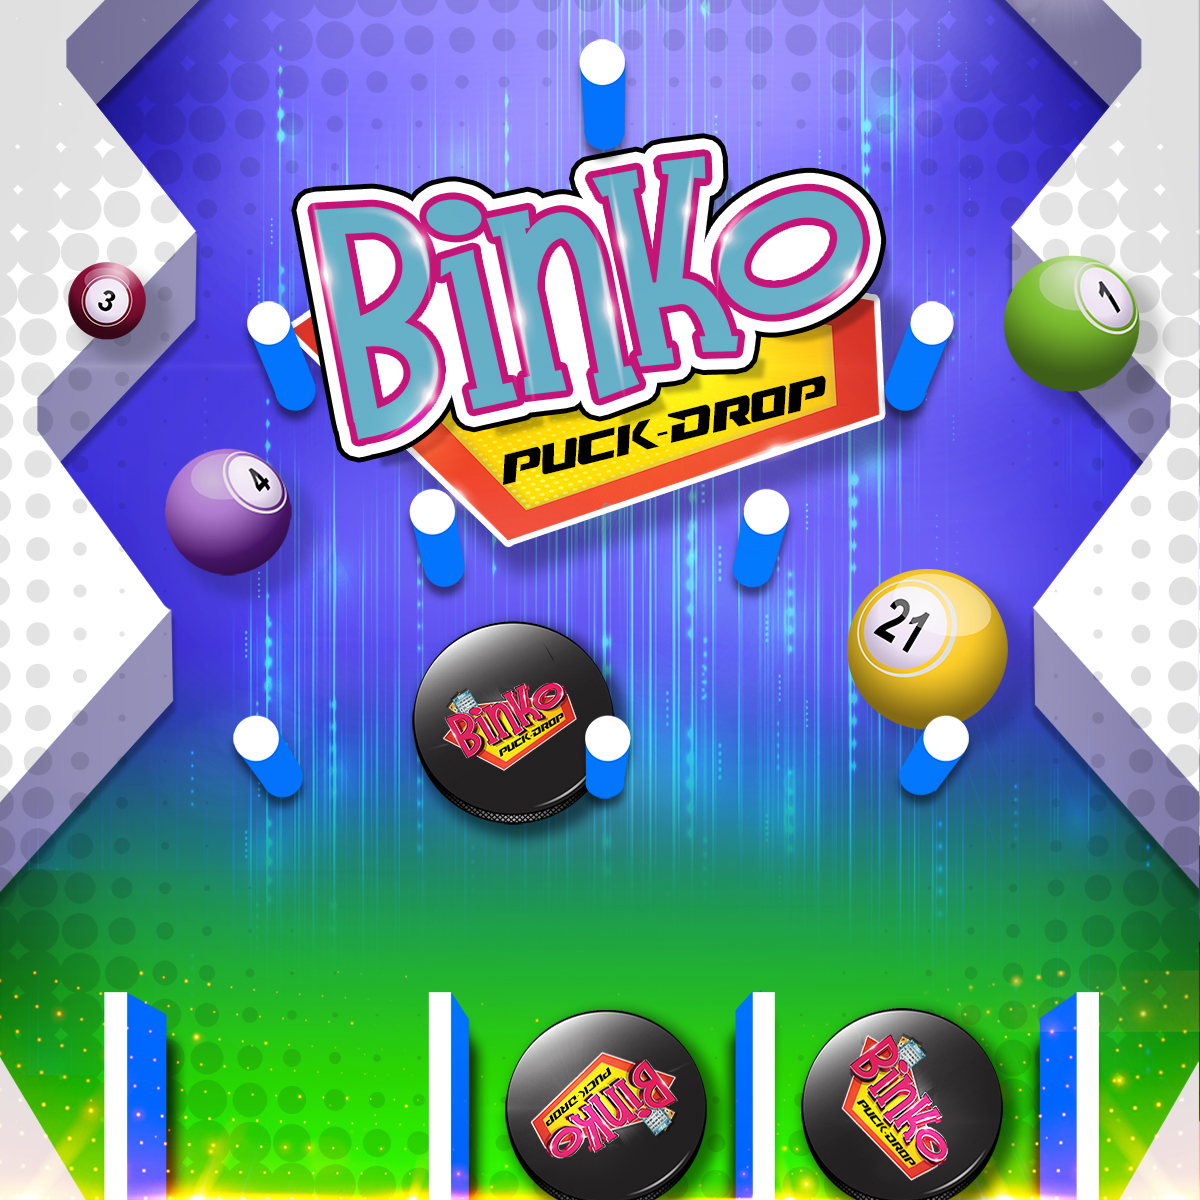 Colorful bingo cards and round bingo balls w/numbers